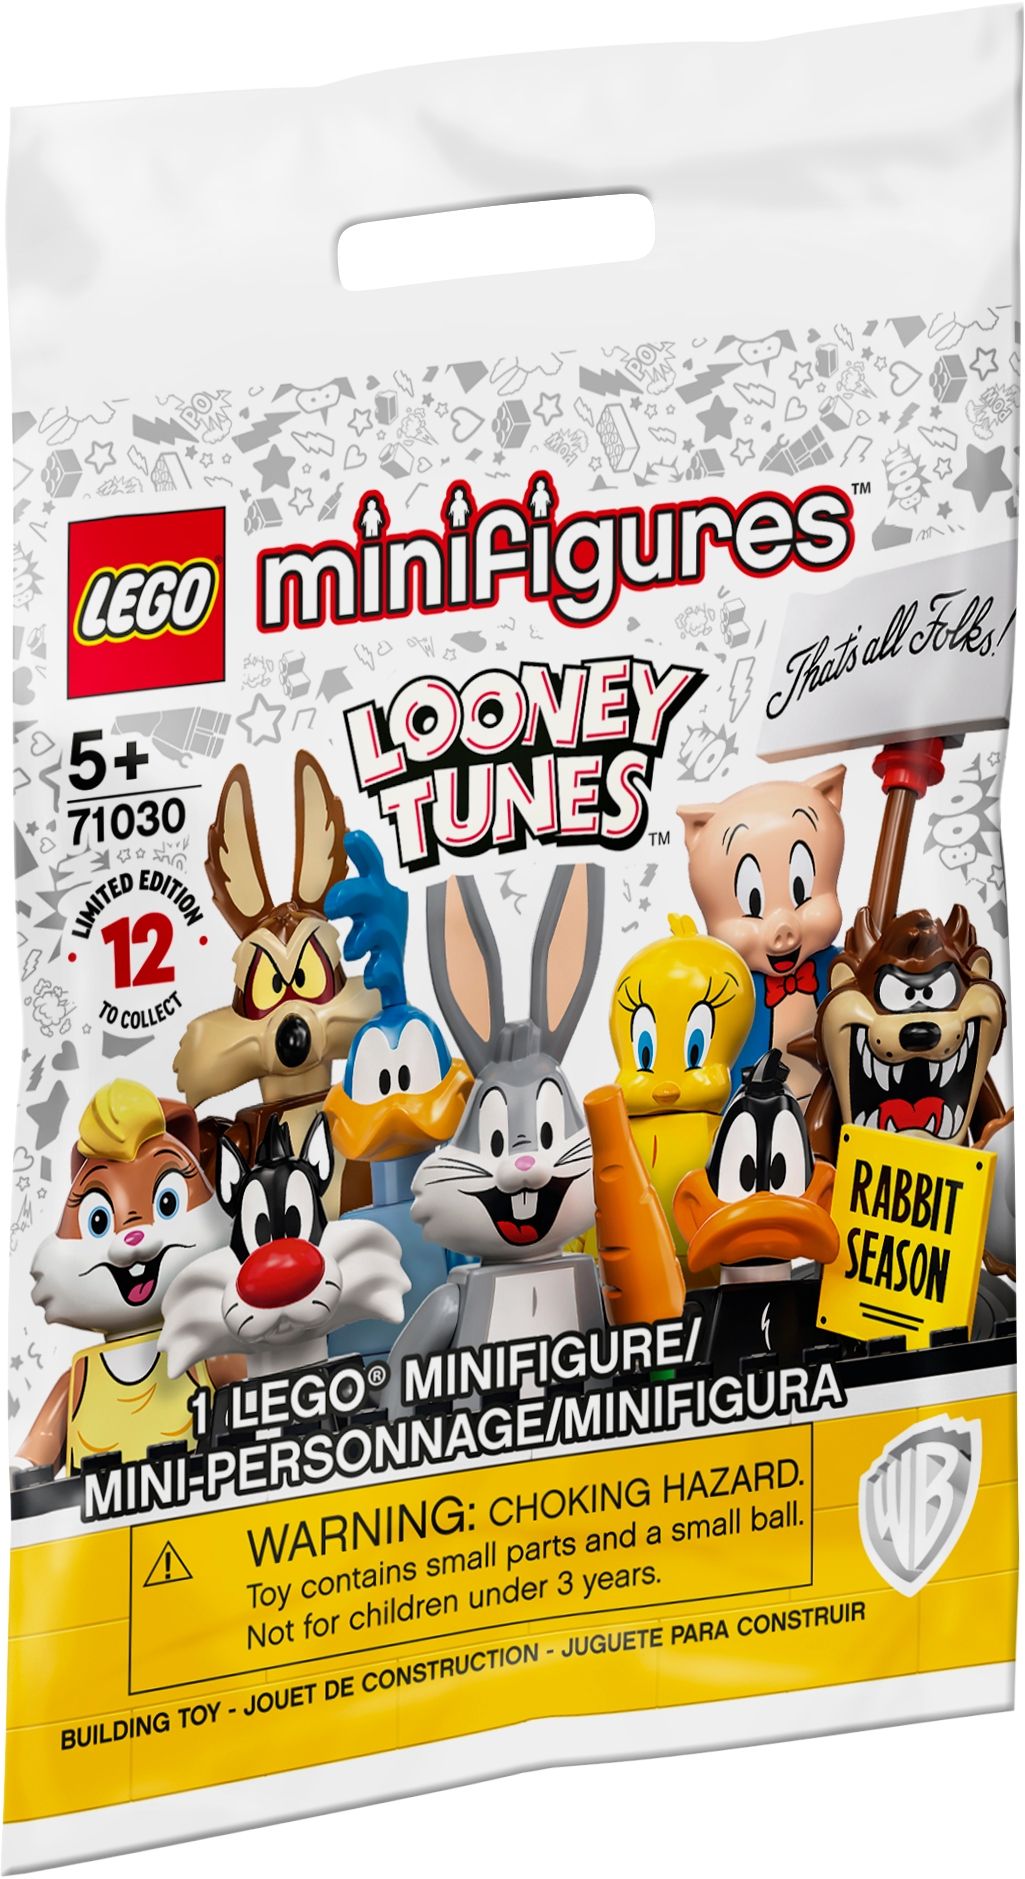 LEGO Collectable Minifigures 71030 Looney Tunes™ LEGO_71030_alt1.jpg